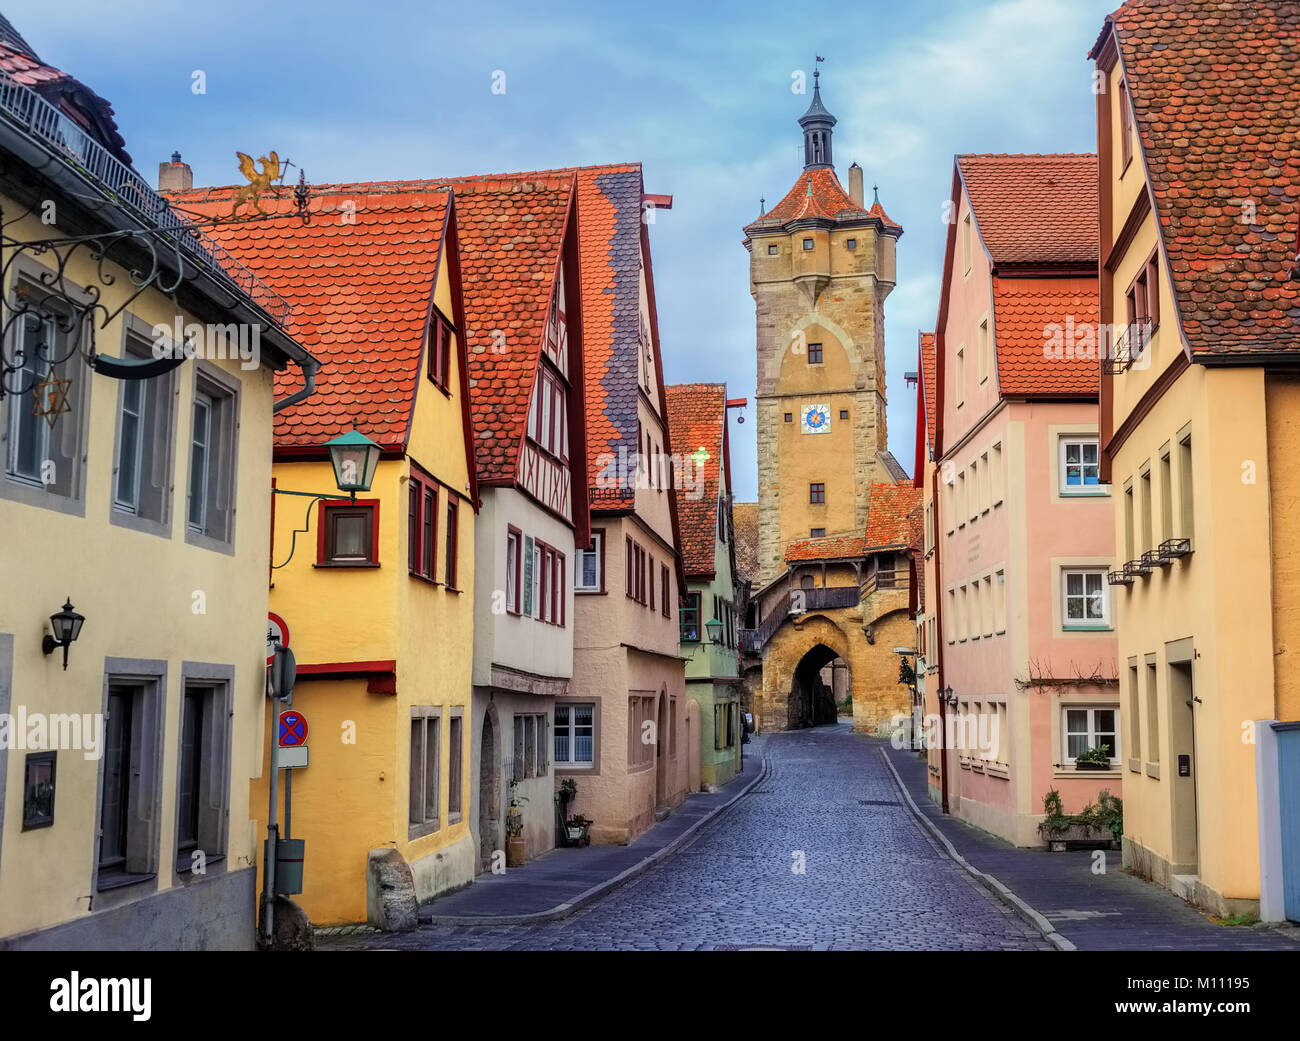 Klingentor Porta e torre a Rothenburg ob der Tauber Città Vecchia, Germania Foto Stock